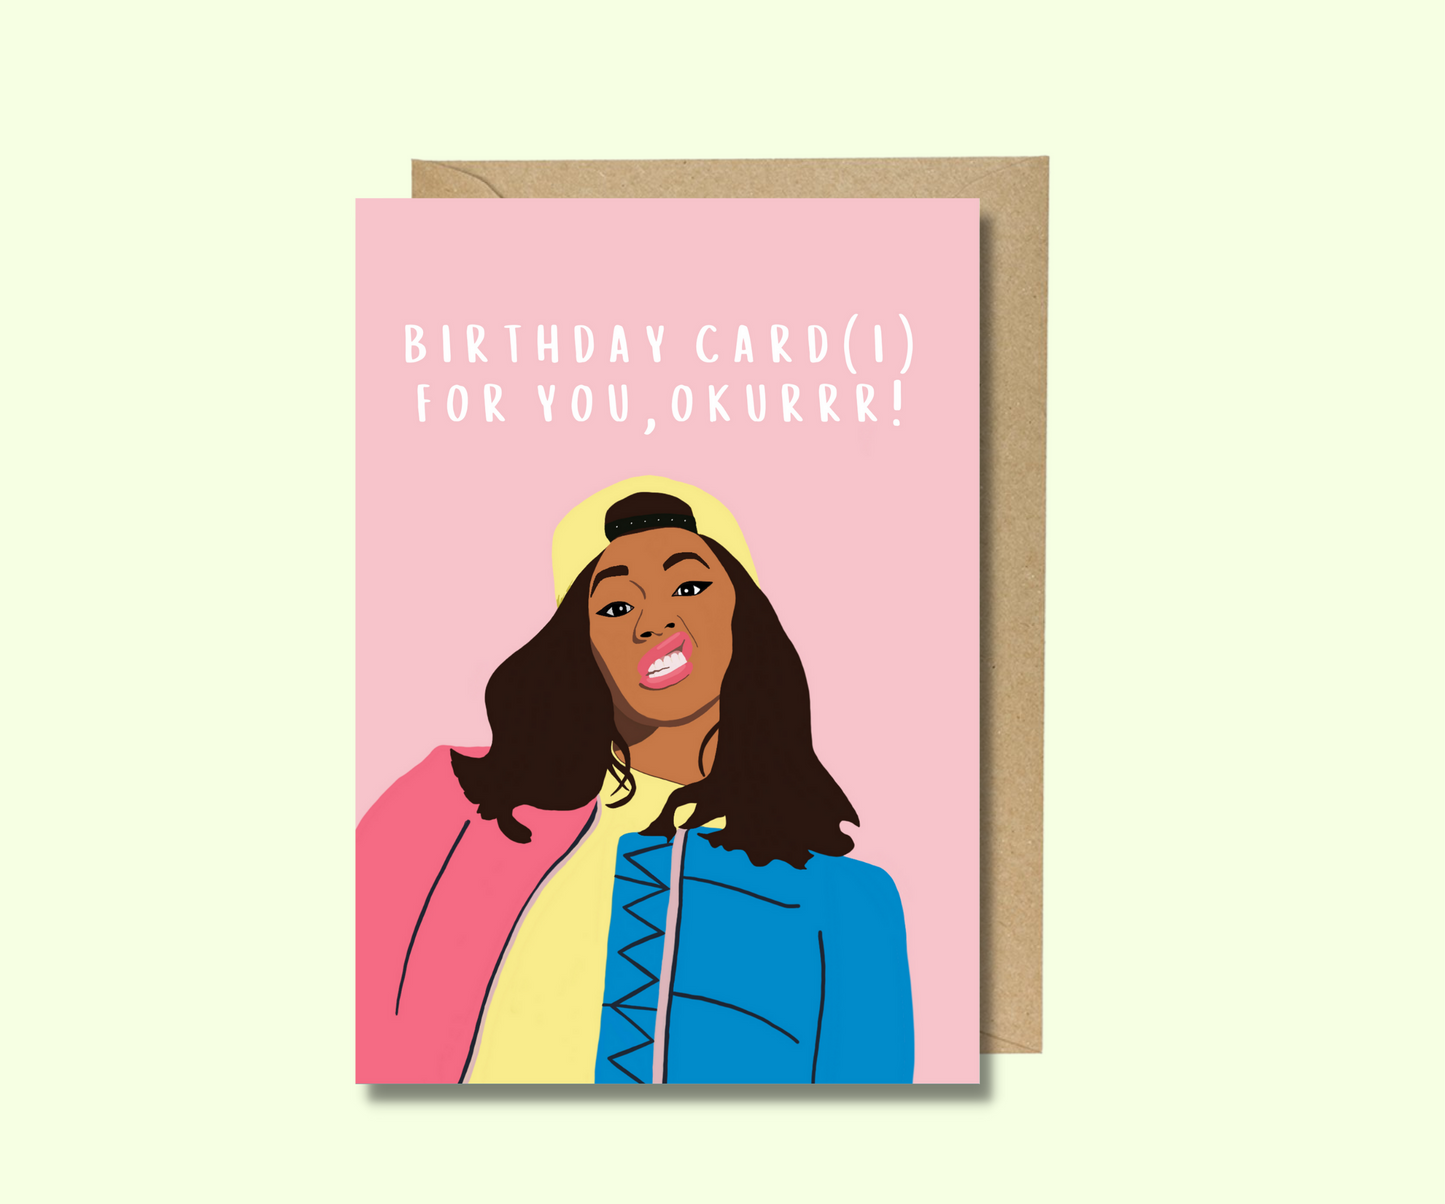 Cardi B Geburtstagskarte - Birthday Card(i) for you, okurrr!